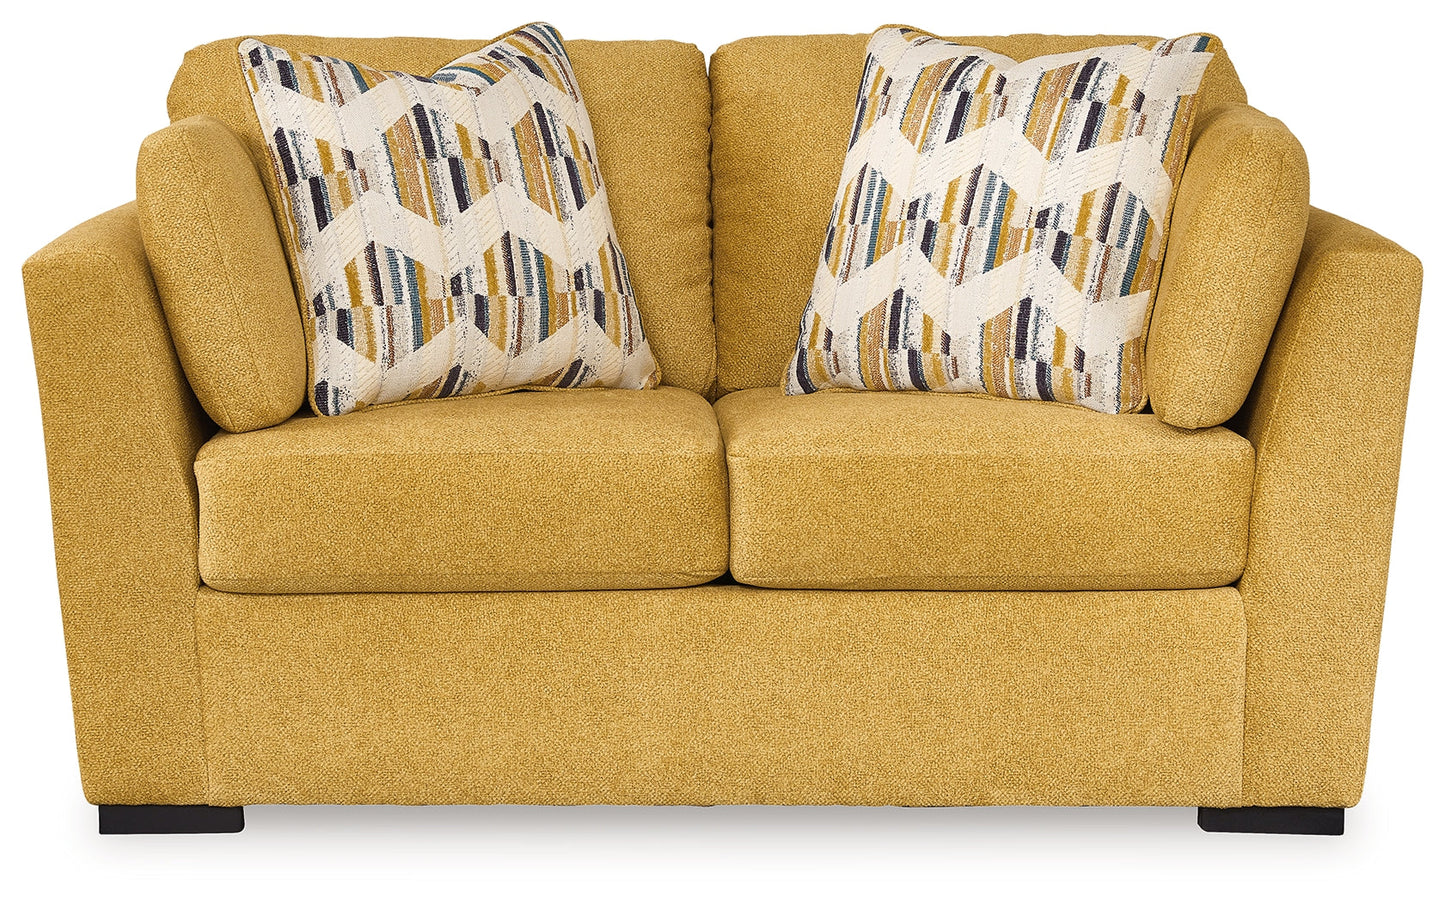 Keerwick Sofa, Loveseat, Oversized Chair and Ottoman